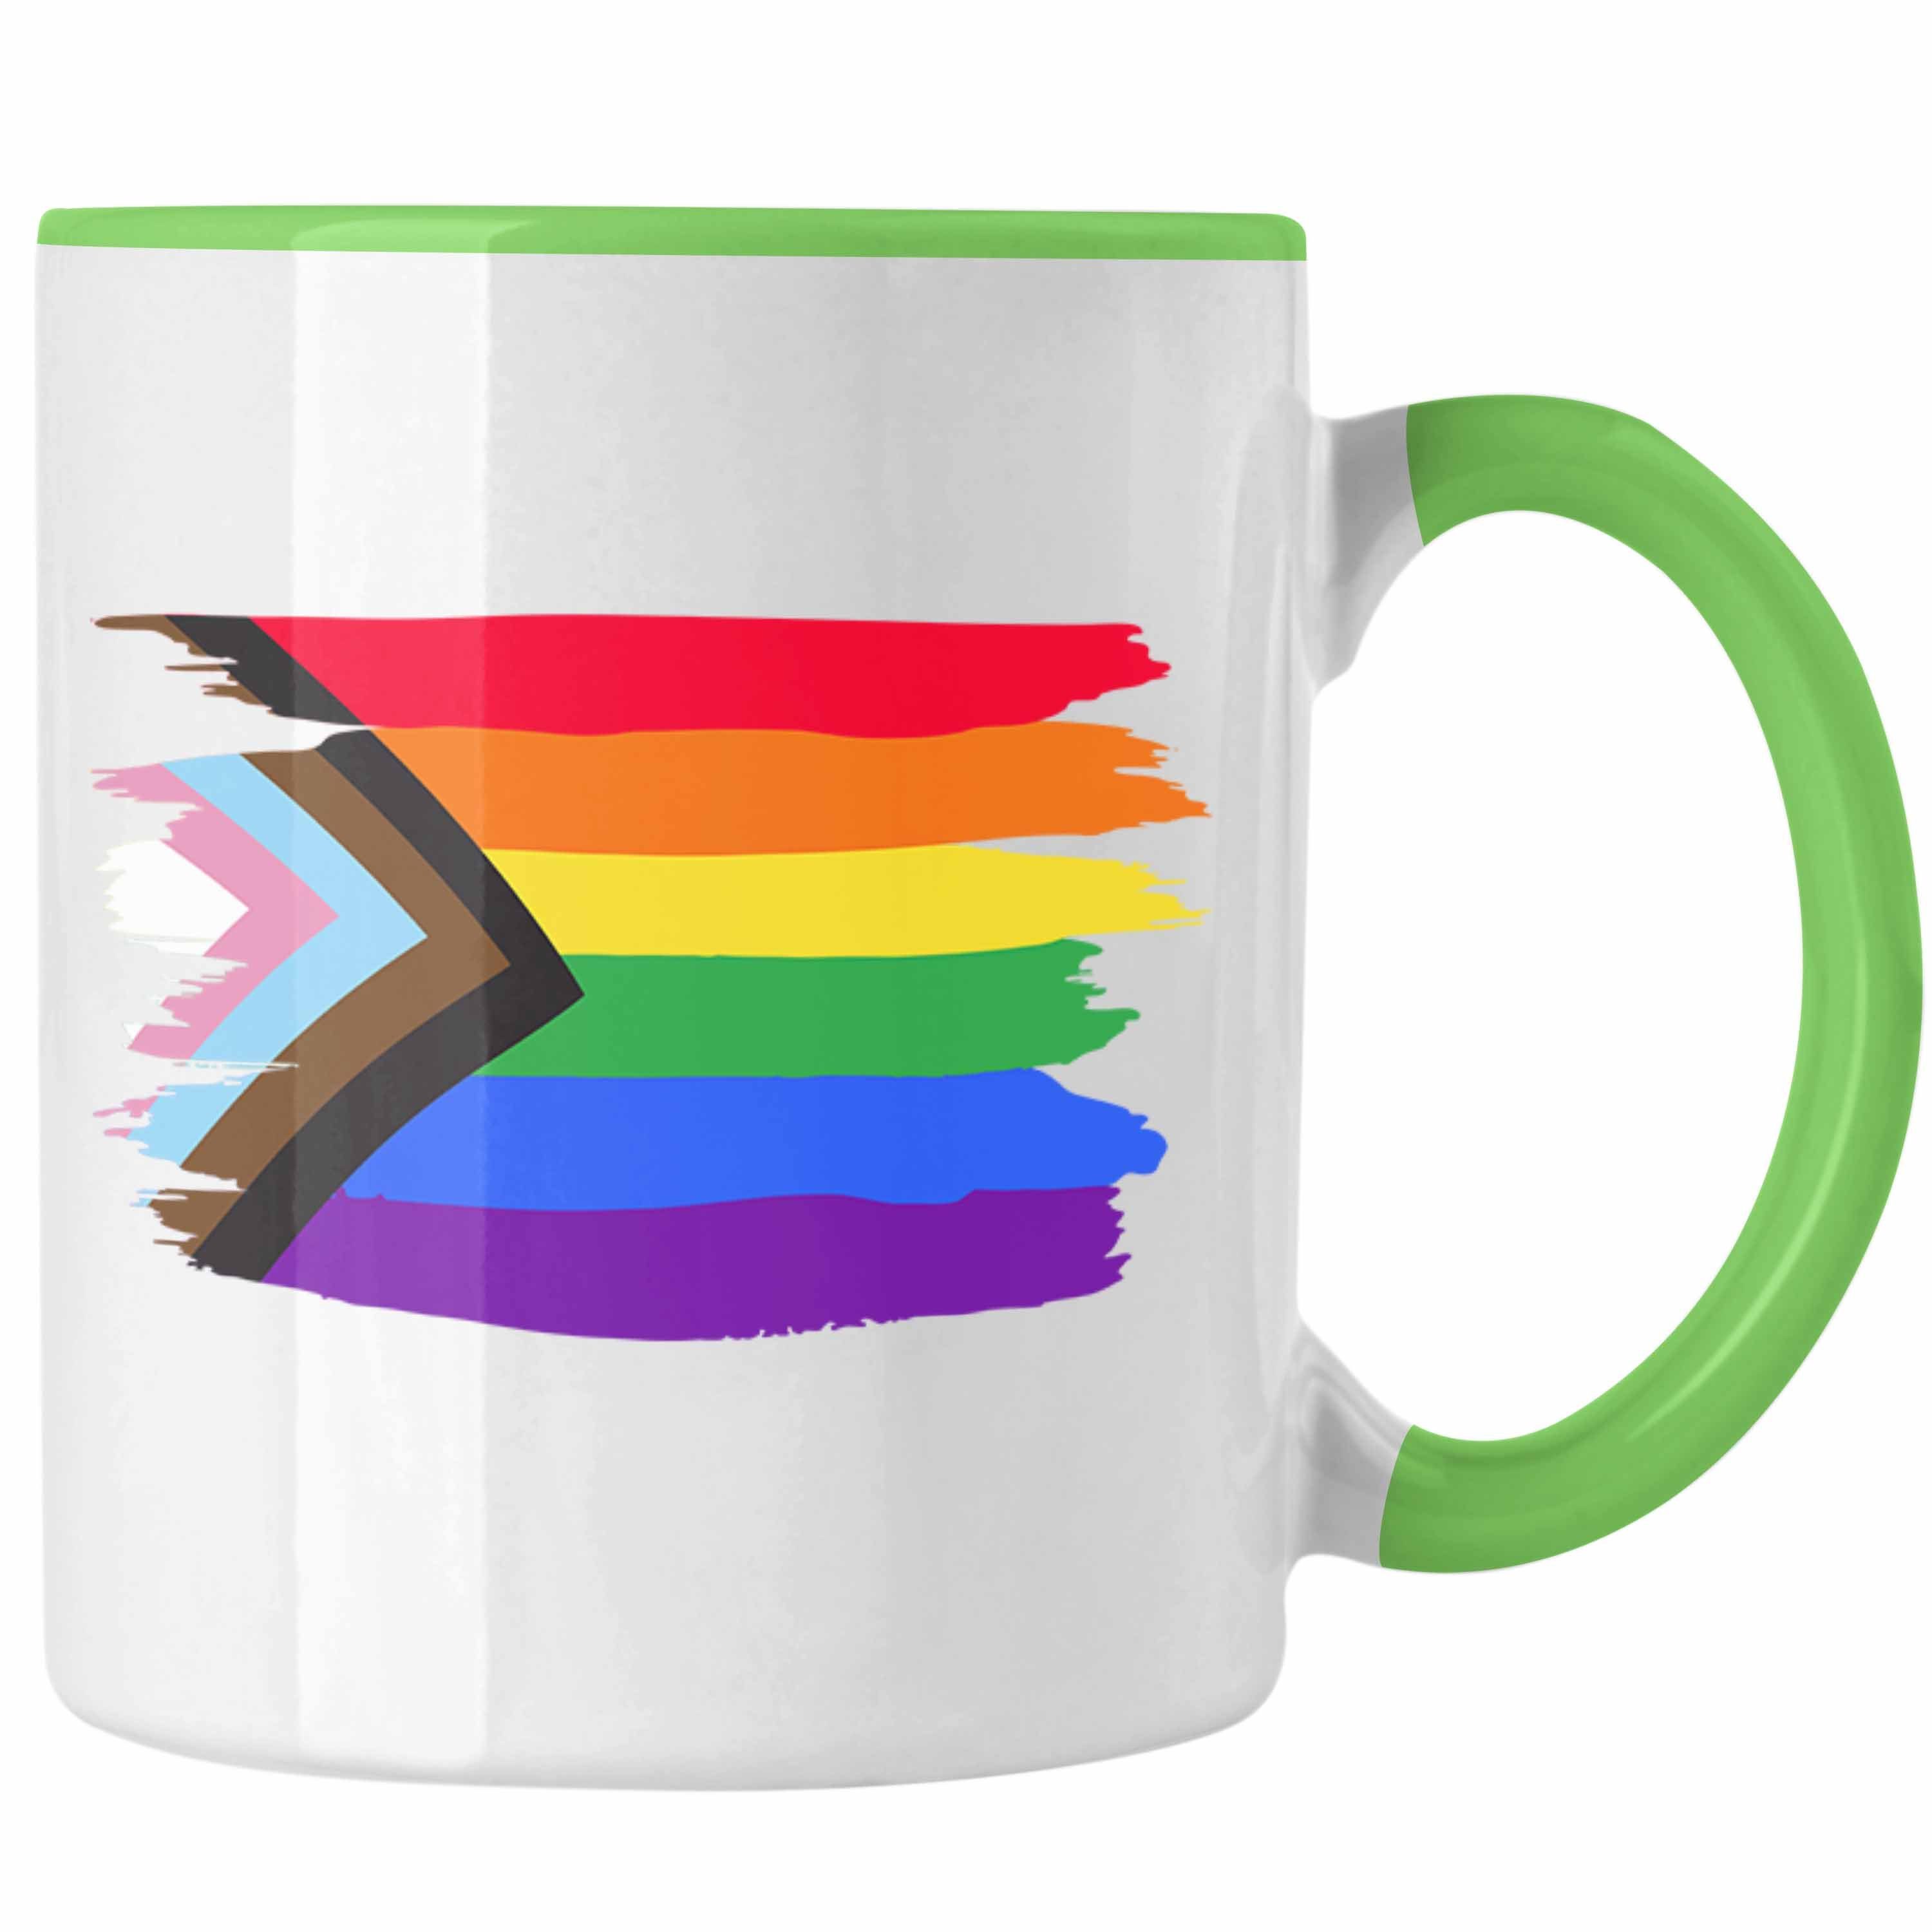 Trendation Tasse Trendation - Regenbogen Tasse Geschenk LGBT Schwule Lesben Transgender Grafik Pride Flagge Grün